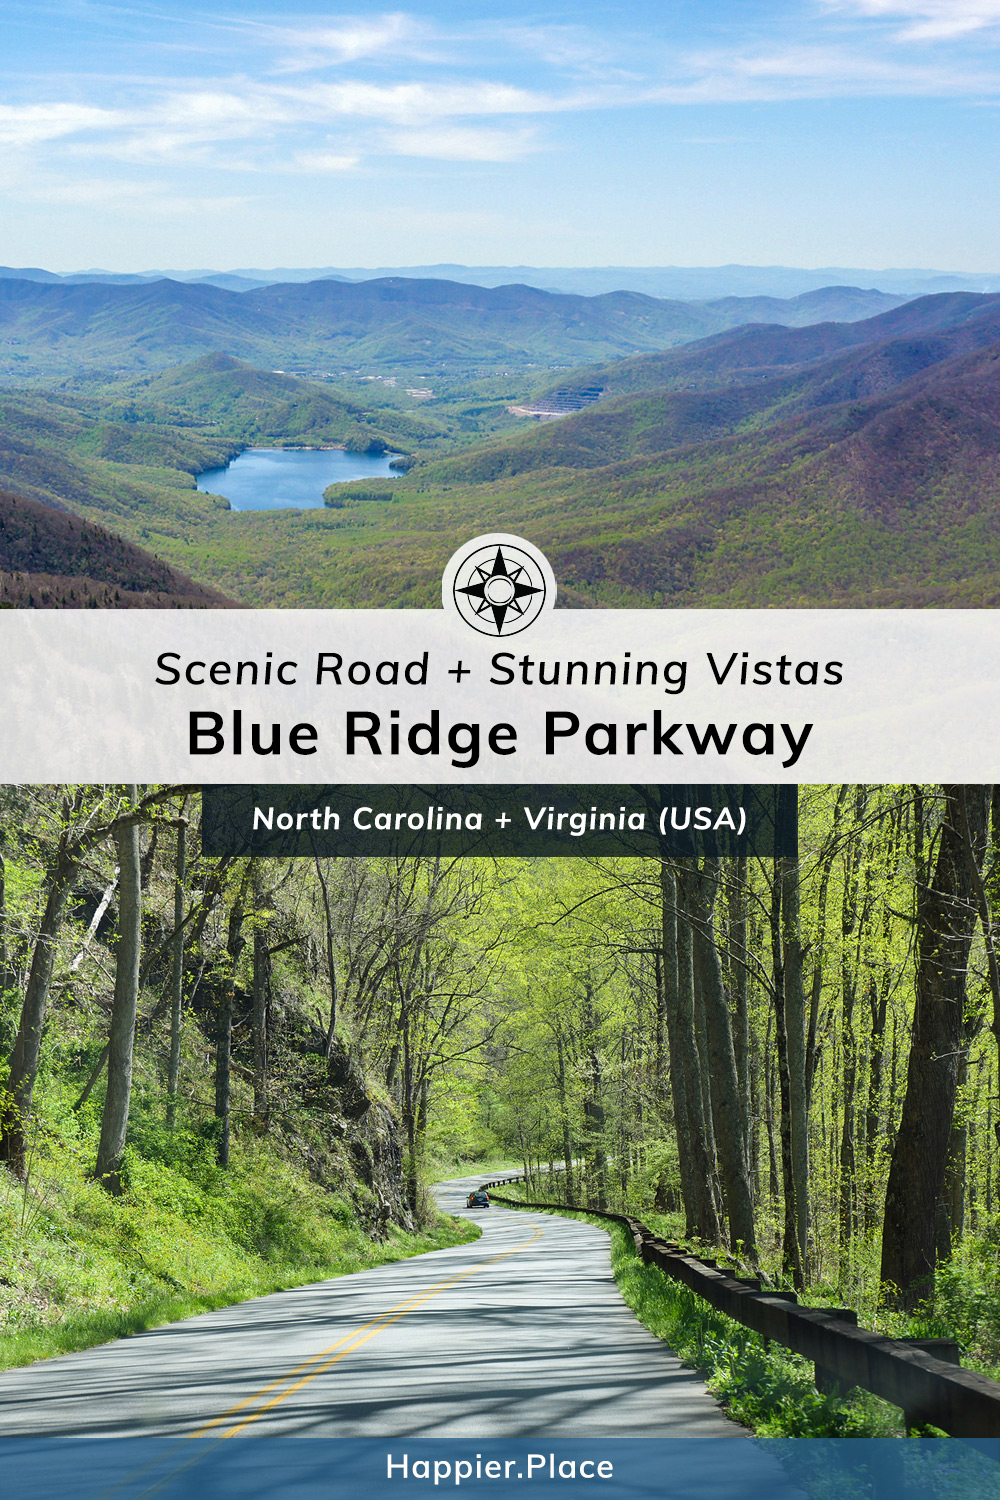 Scenic Road and Stunning Vistas: Blue Ridge Parkway - from Virginia to North Carolina.